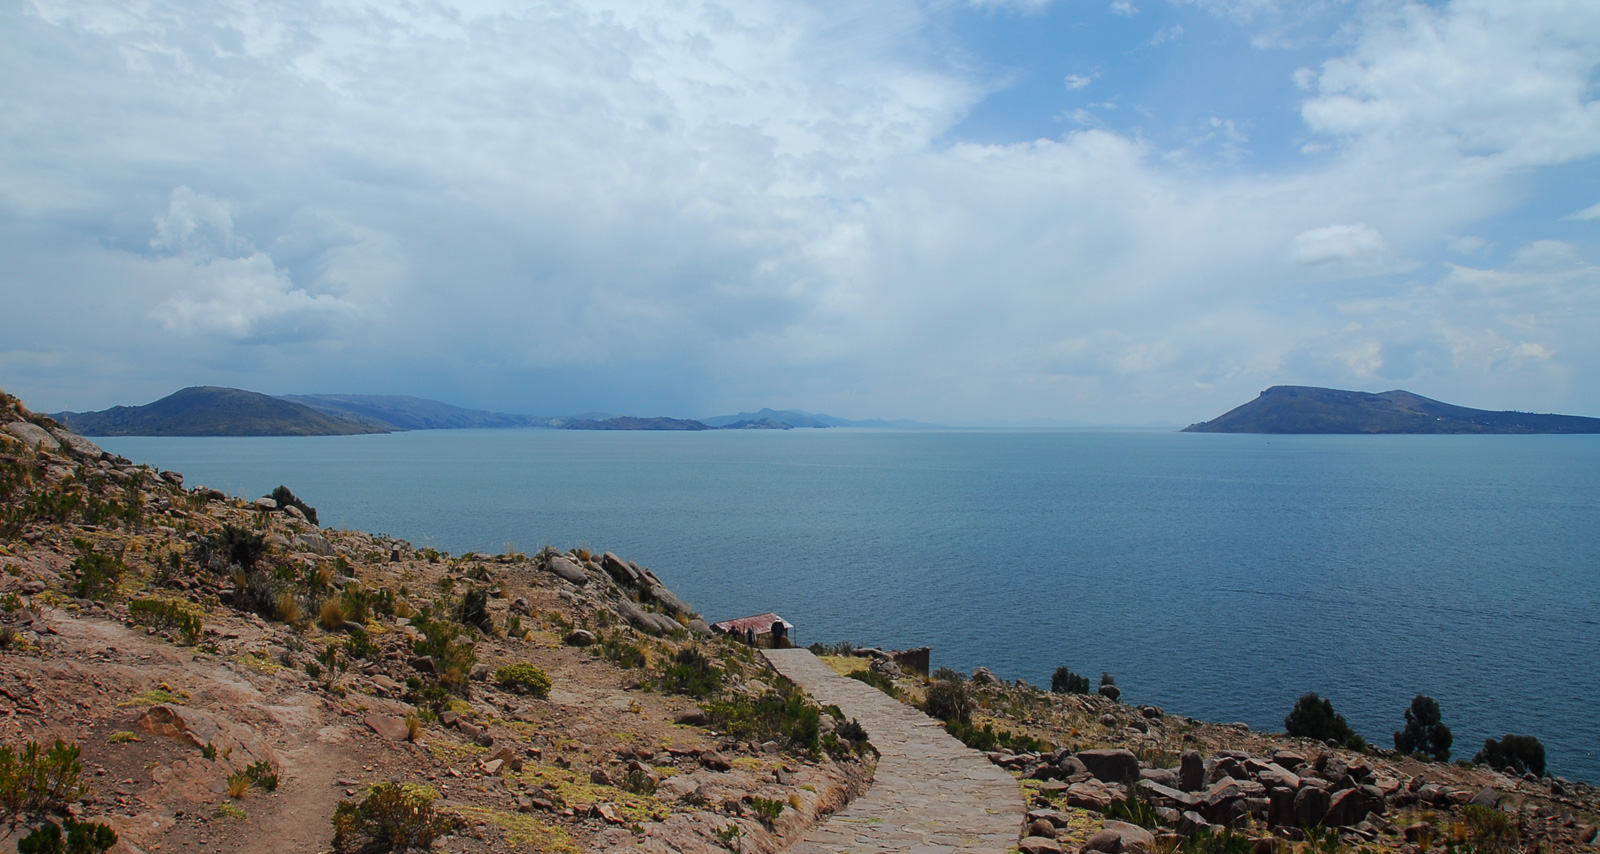 Lake Titicaca [18 mm, 1/320 Sek. bei f / 9.0, ISO 100]